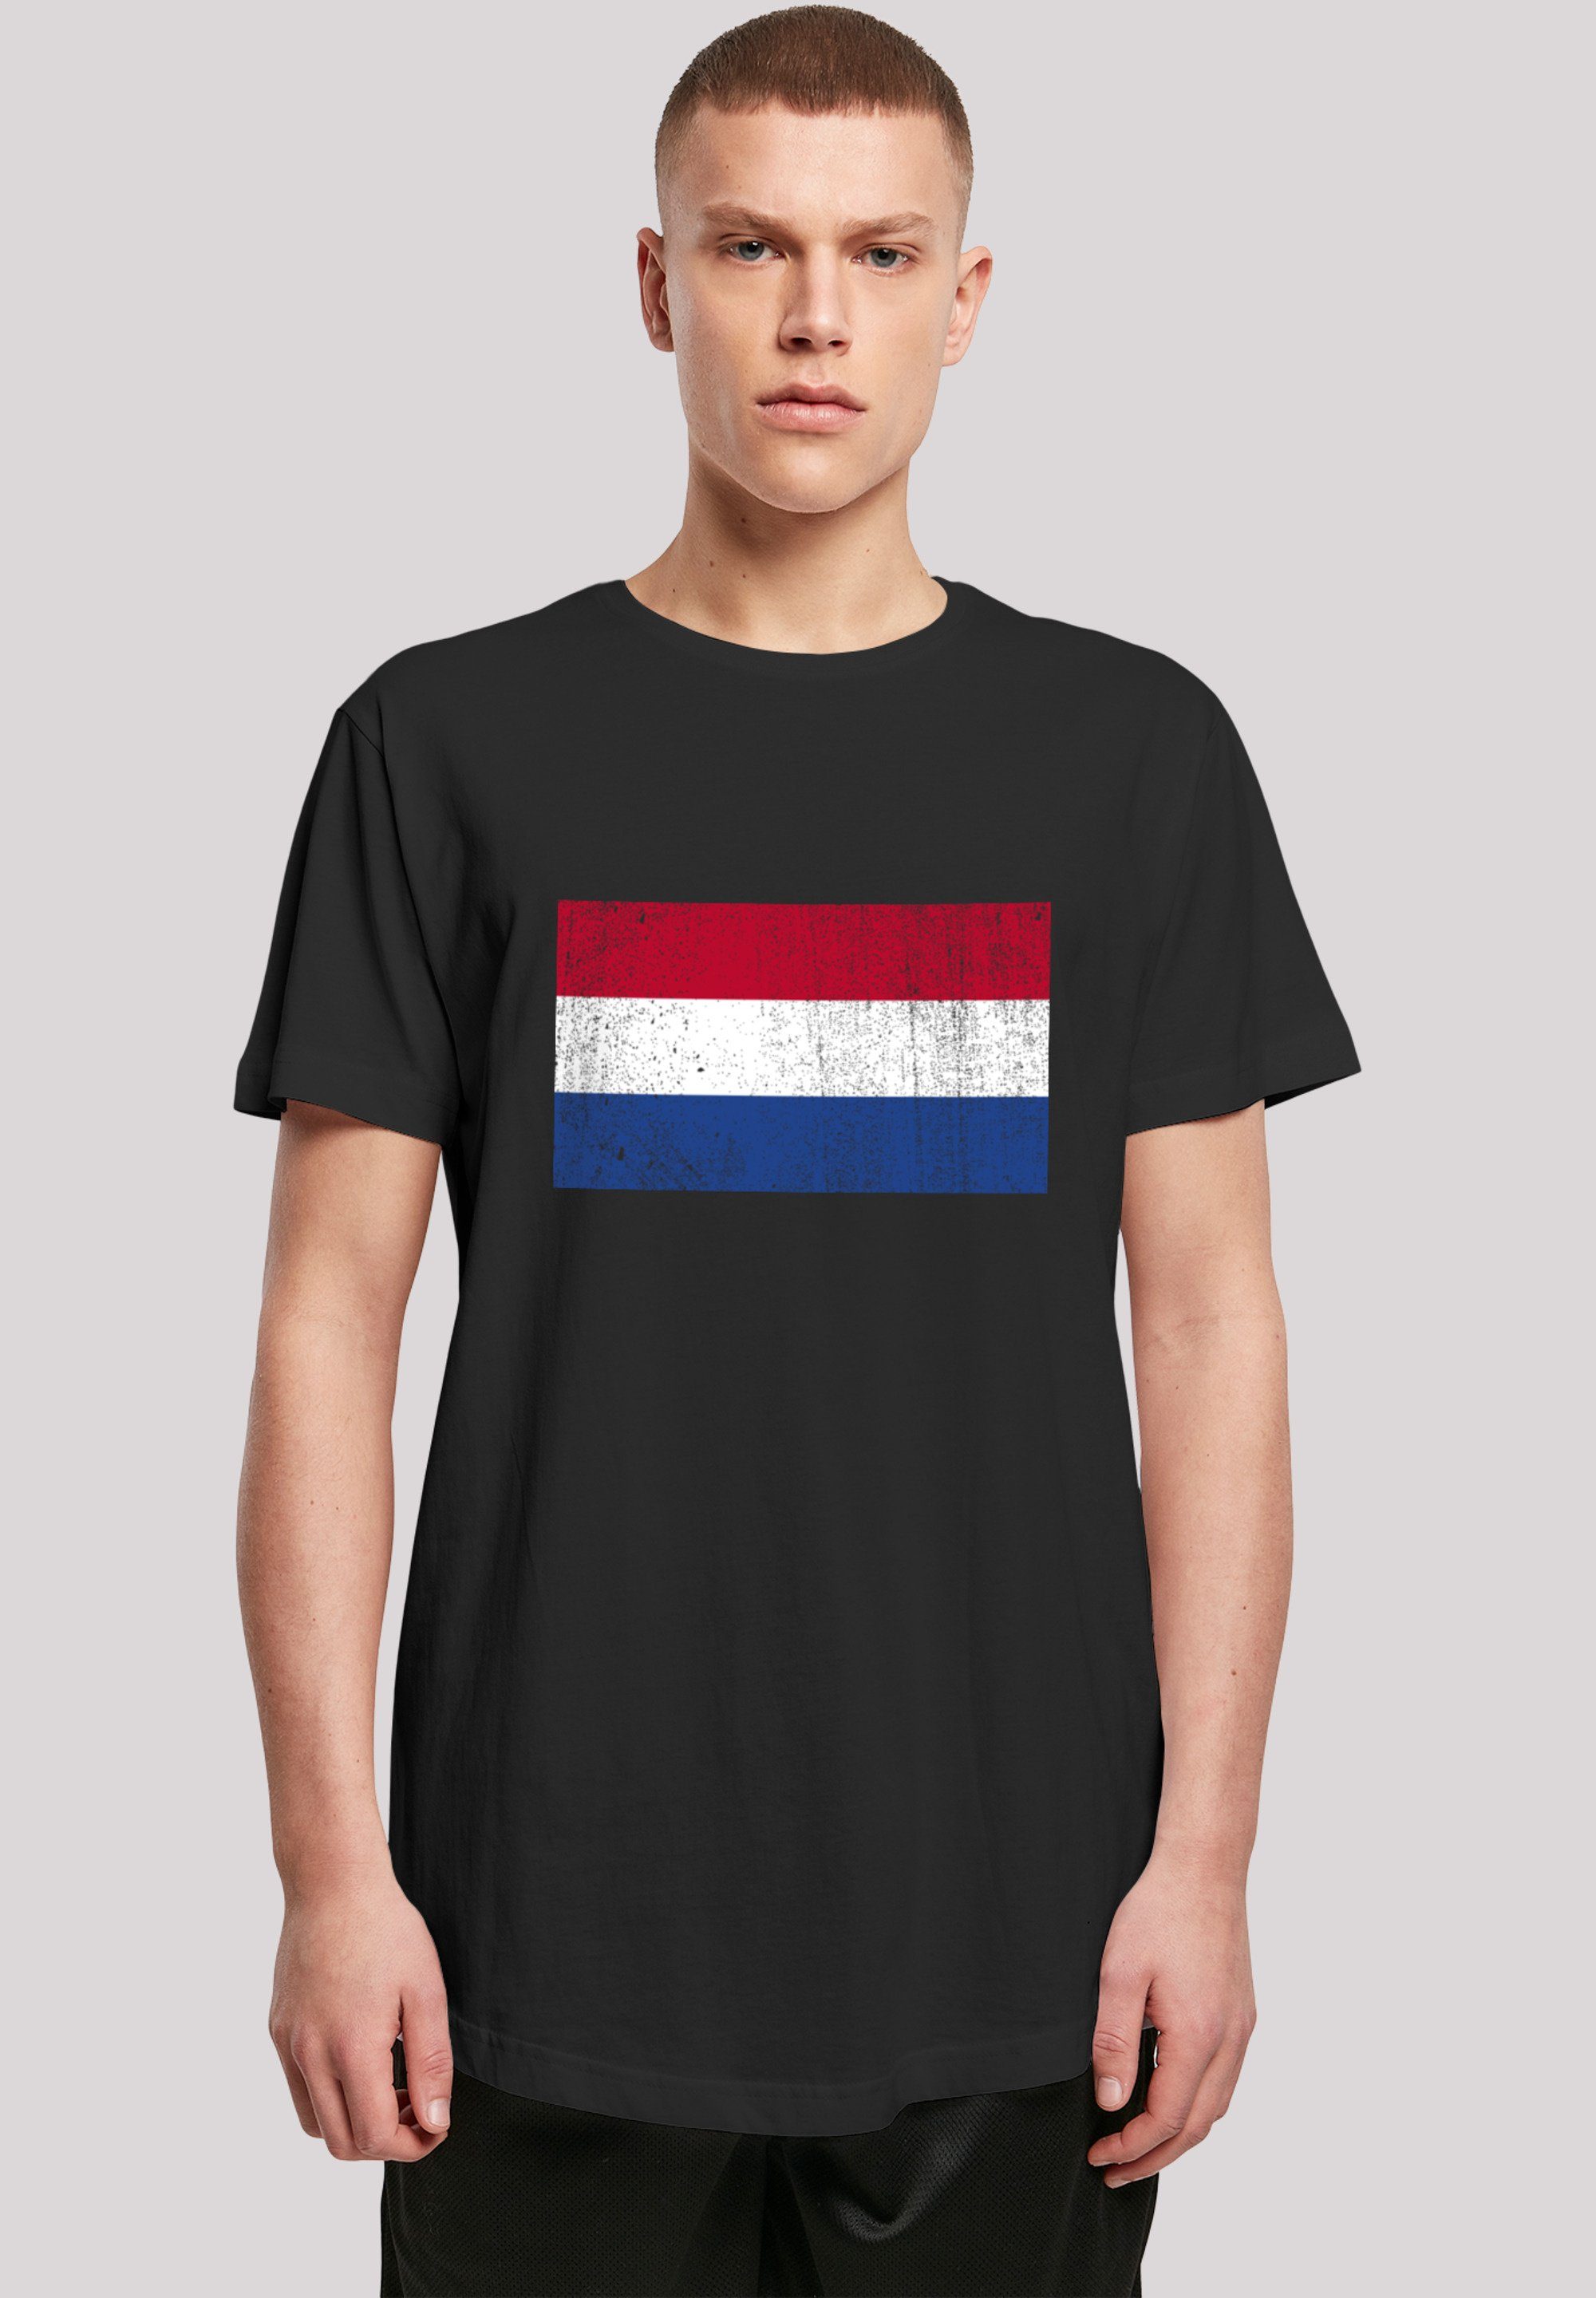 F4NT4STIC NIederlande Flagge Holland Print schwarz T-Shirt Netherlands distressed